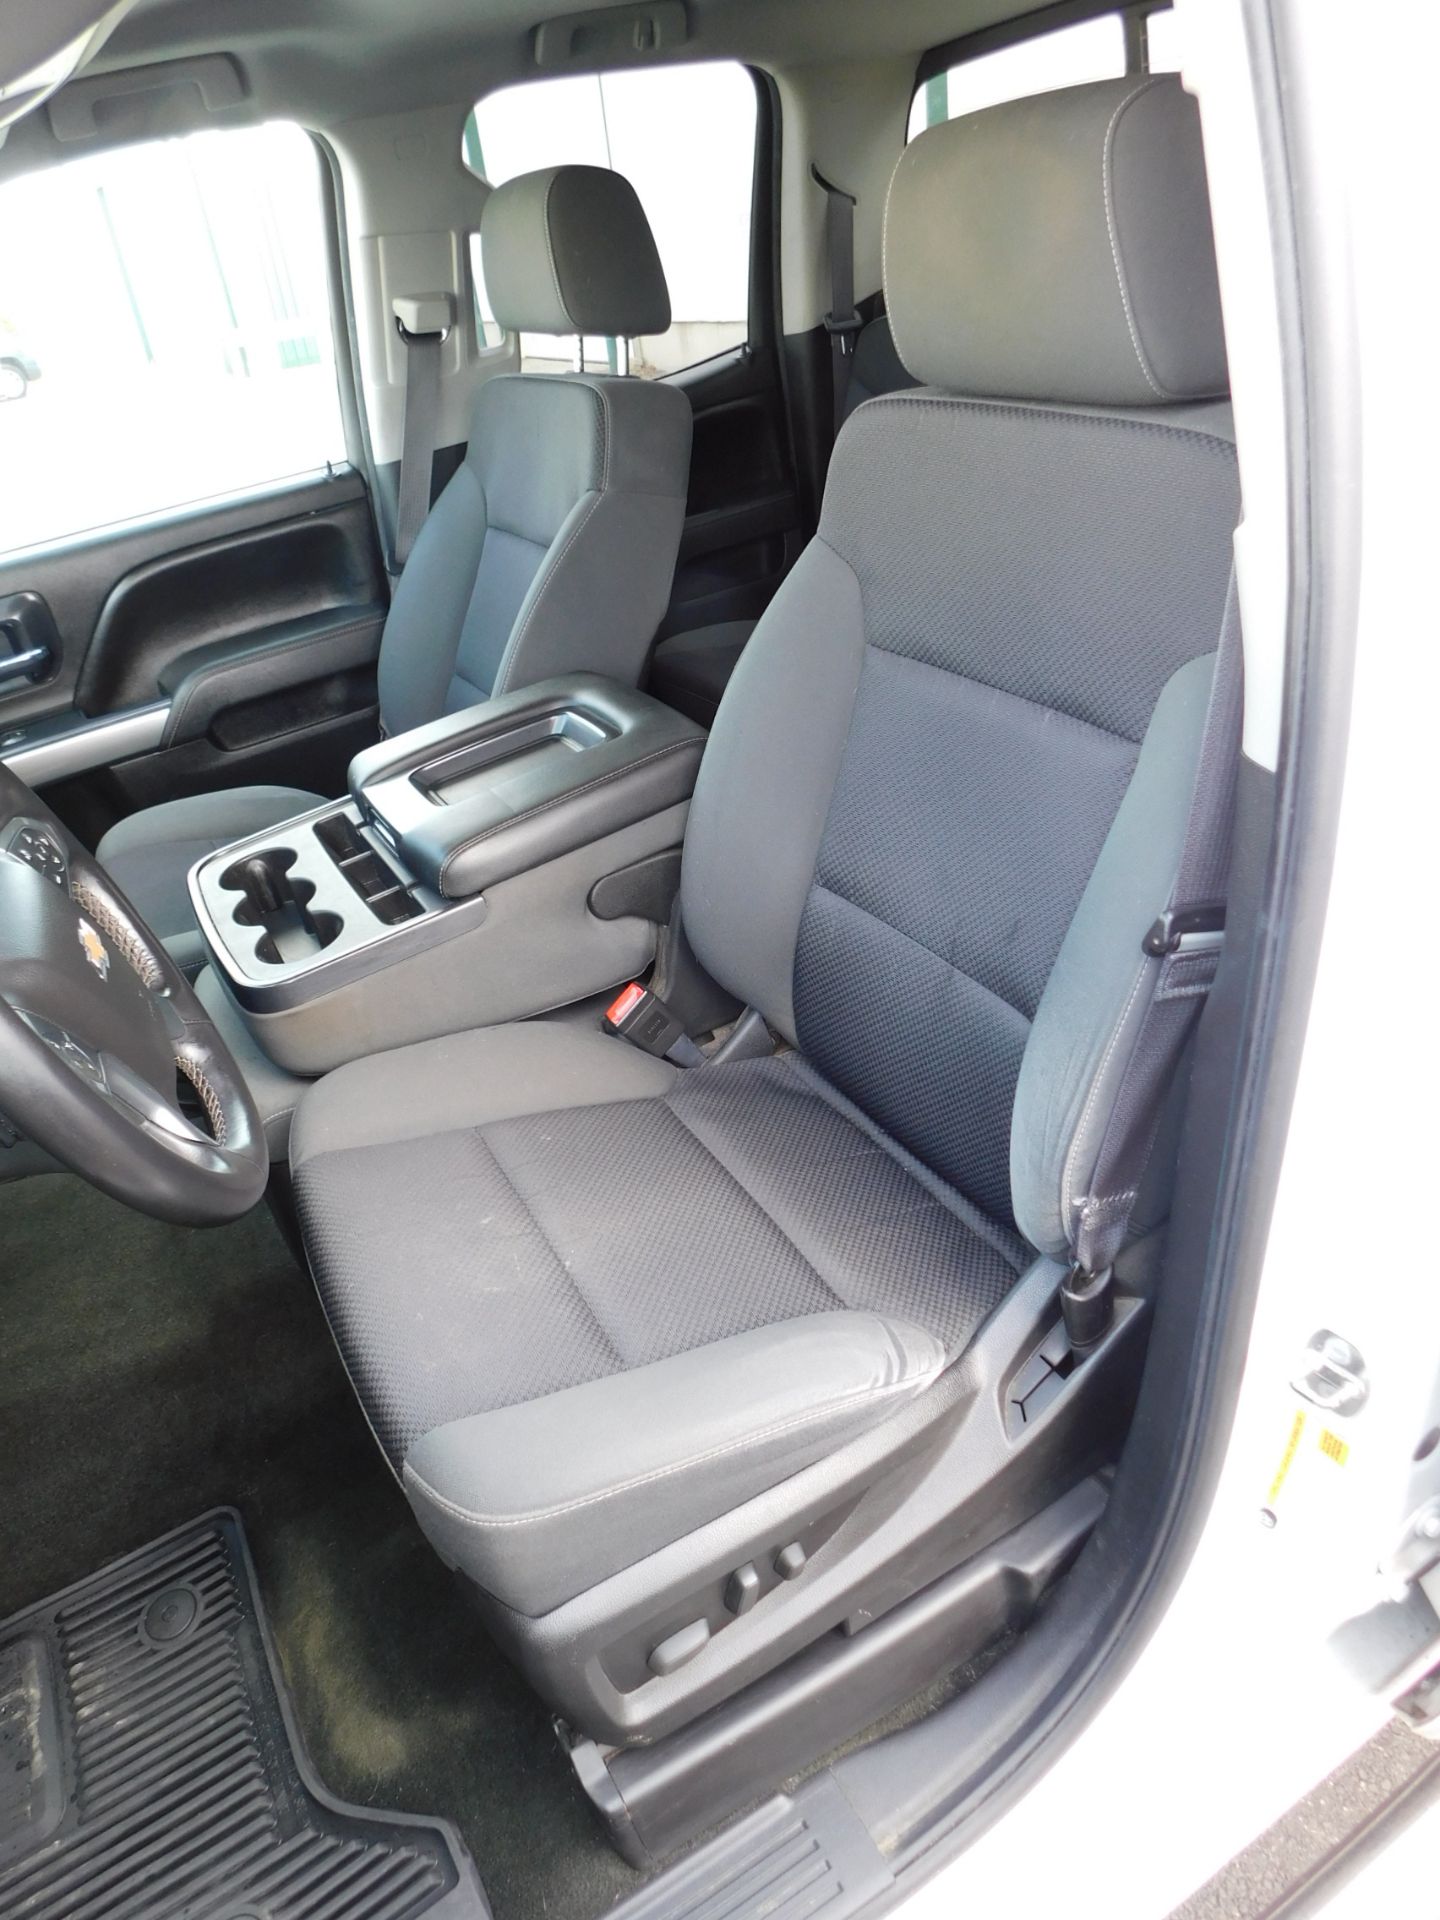 2014 Chevrolet Silverado LT Pickup, VIN 1GCVKREC3EZ139405, 4-Door 4 WD, Automatic, AM/FM, AC, Cruise - Image 25 of 51